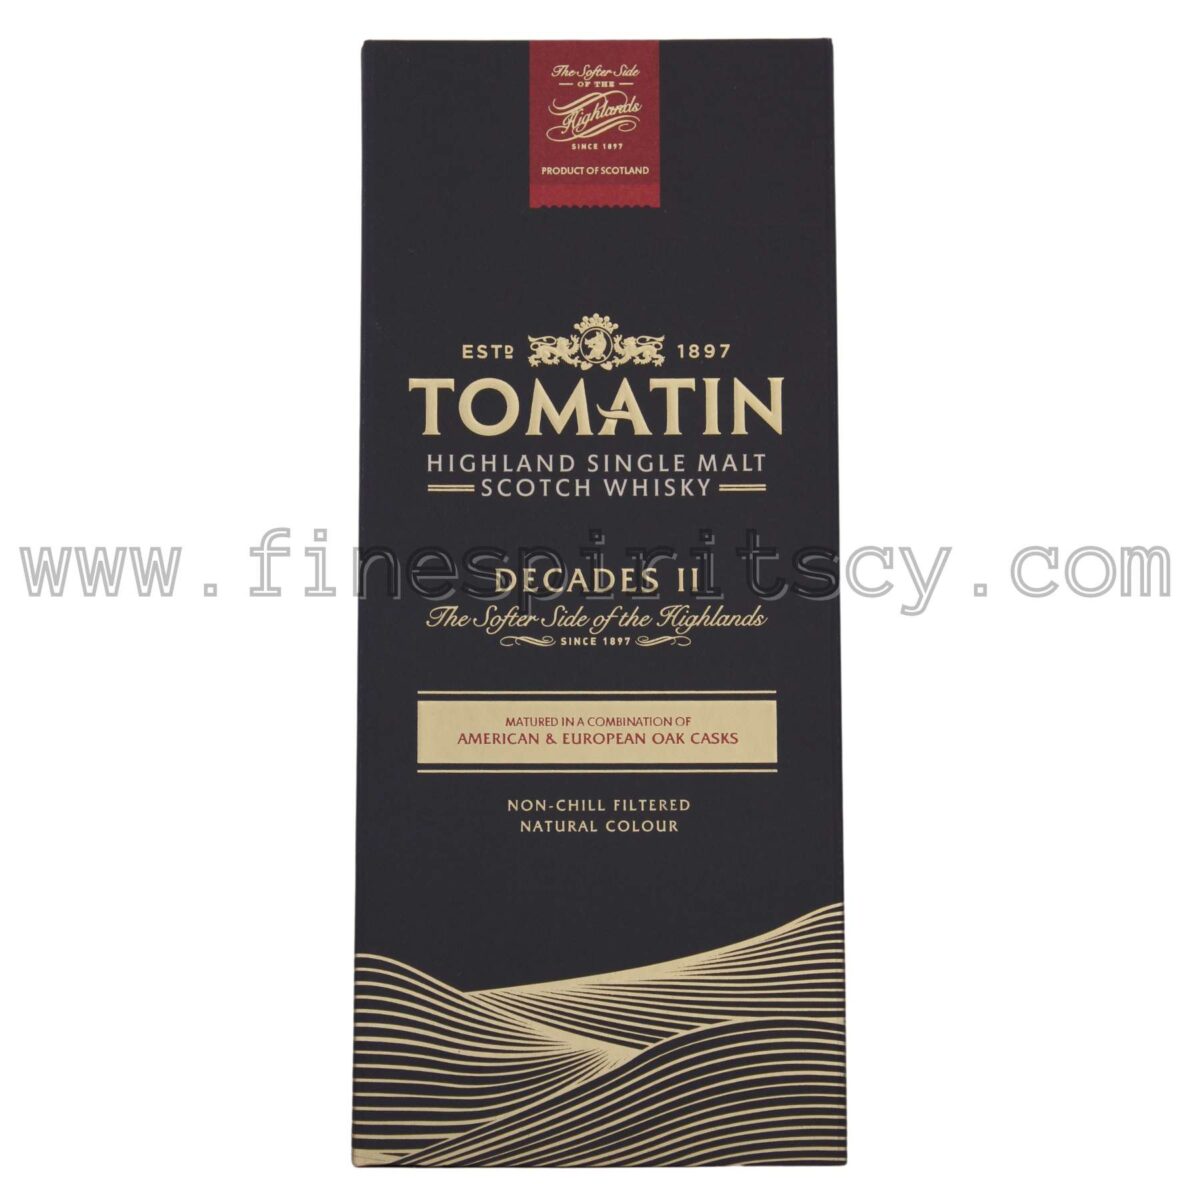 Tomatin Decades II 2 Highlands Single Malt Scotch Whisky Whiskey CY